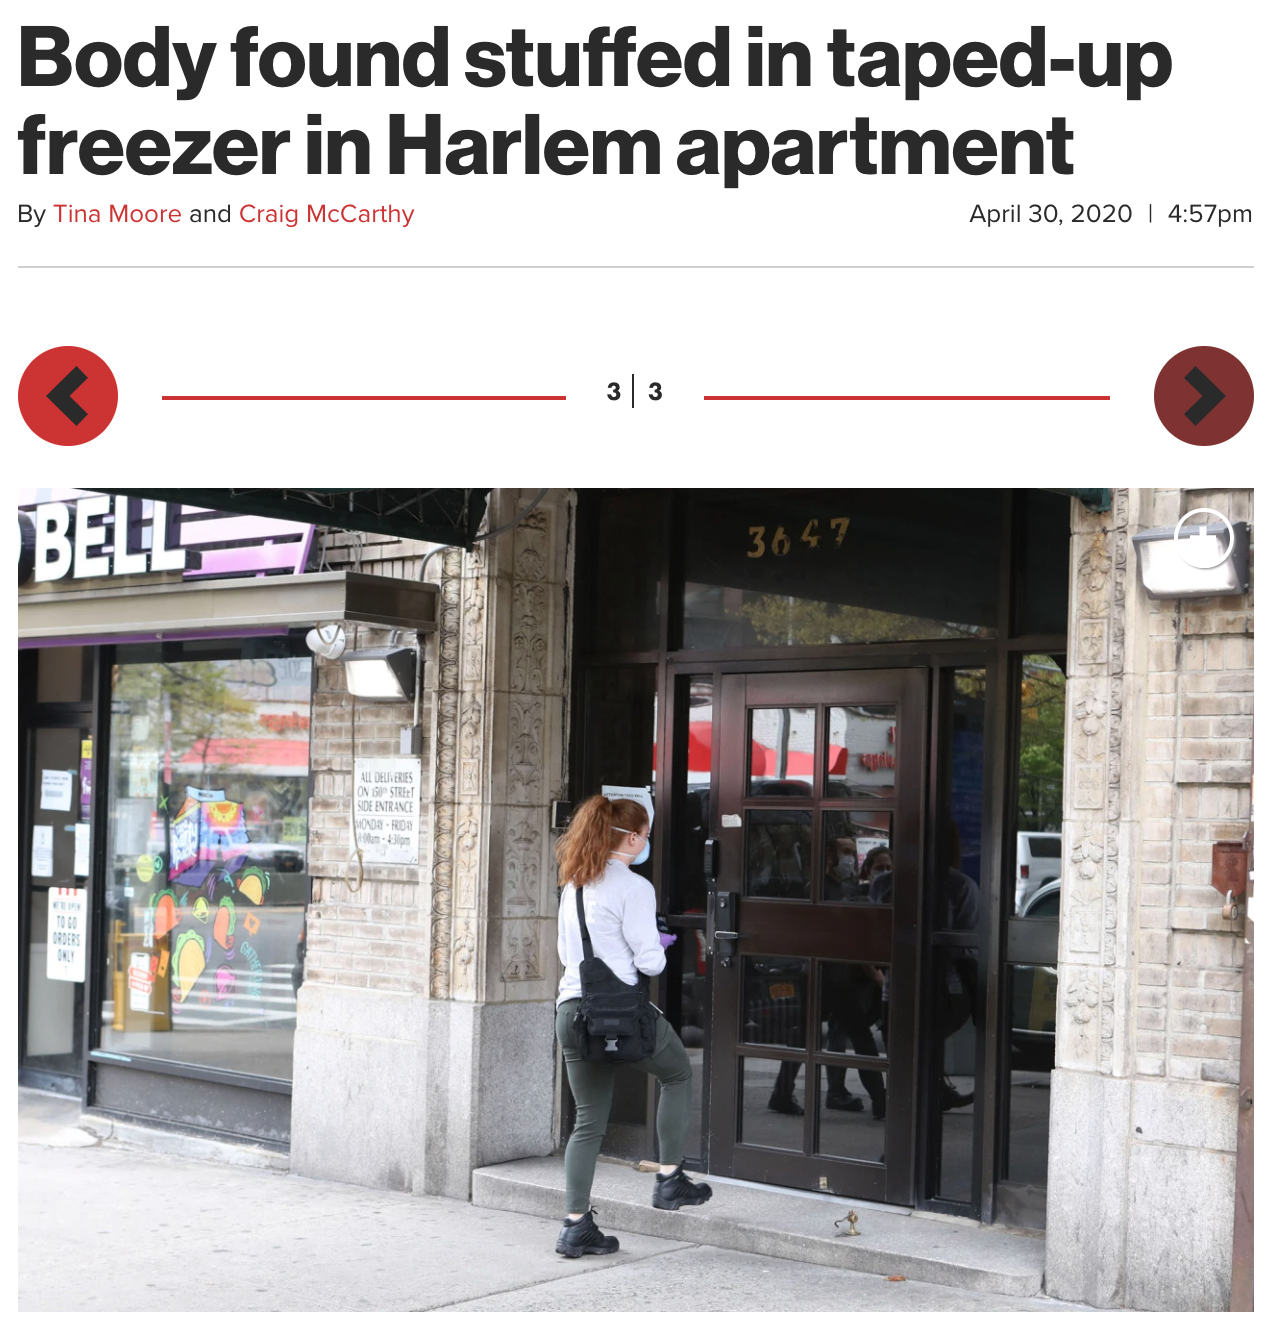 Body found stuffed in tapedup freezer in Harlem apartment